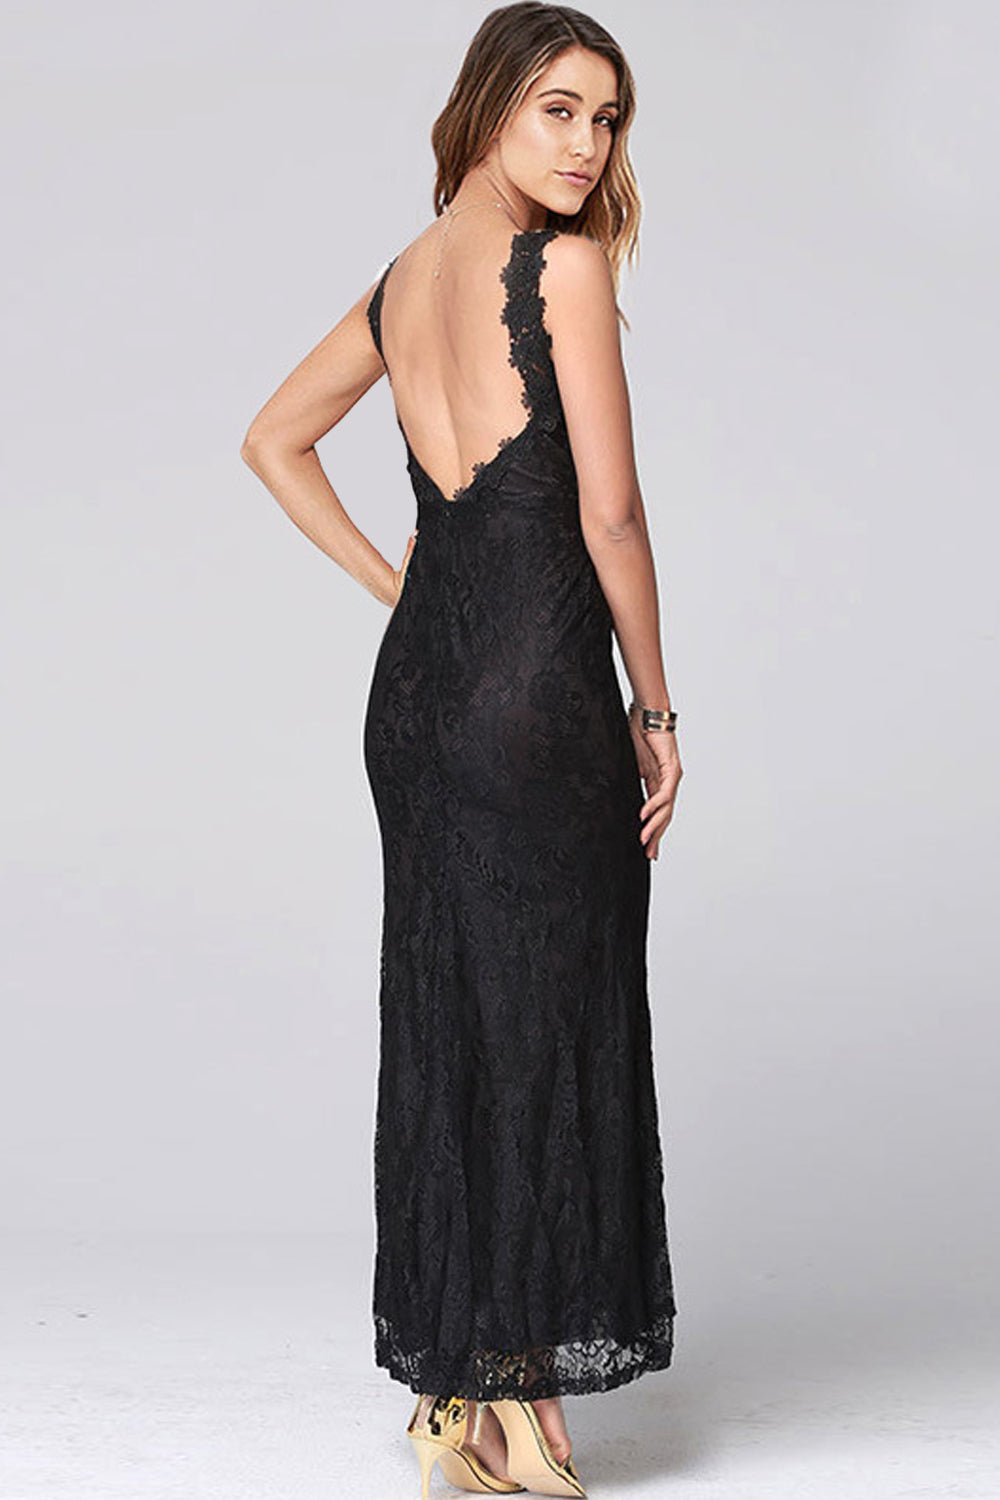 Ketty More Women Lace Designed Deep V-Neck Long Length Maxi Dress-KMWD449